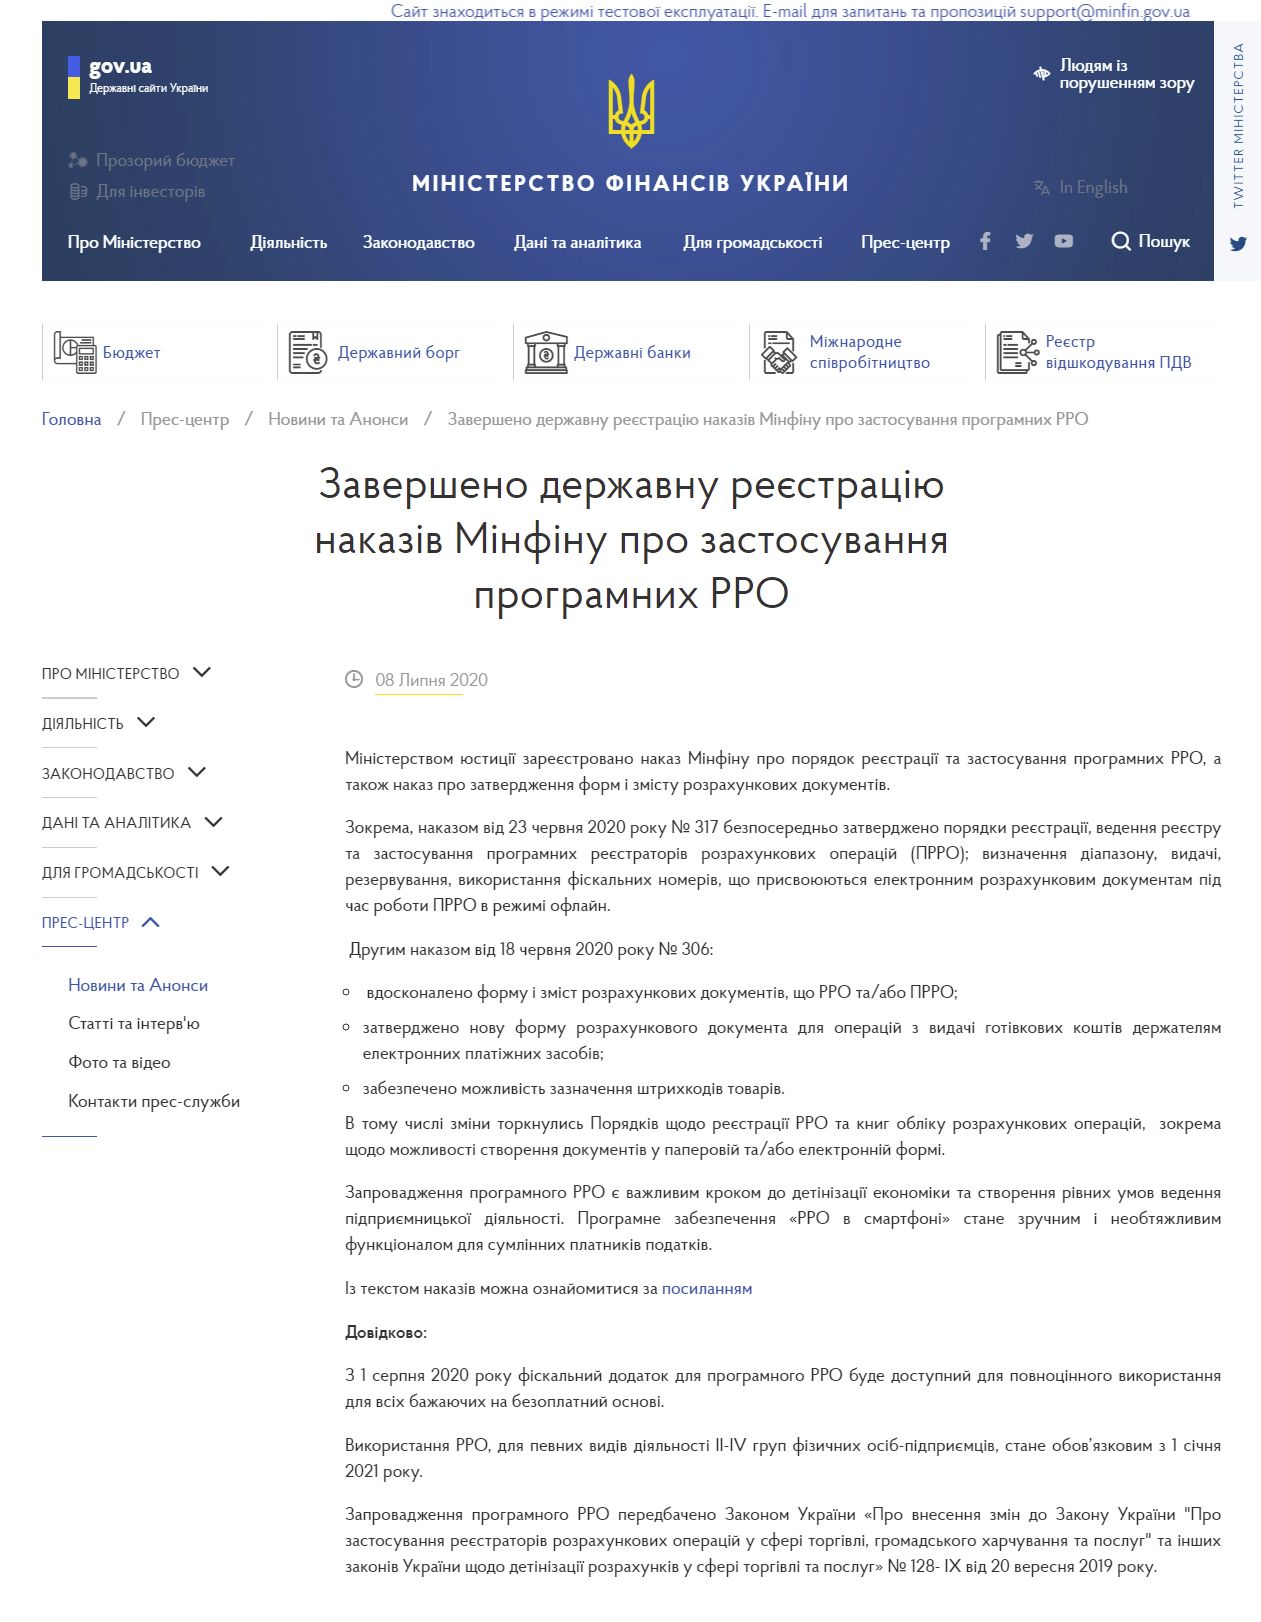 https://www.mof.gov.ua/uk/news/zaversheno_derzhavnu_reiestratsiiu_nakaziv_minfinu_pro_zastosuvannia_programnikh_rro-2254